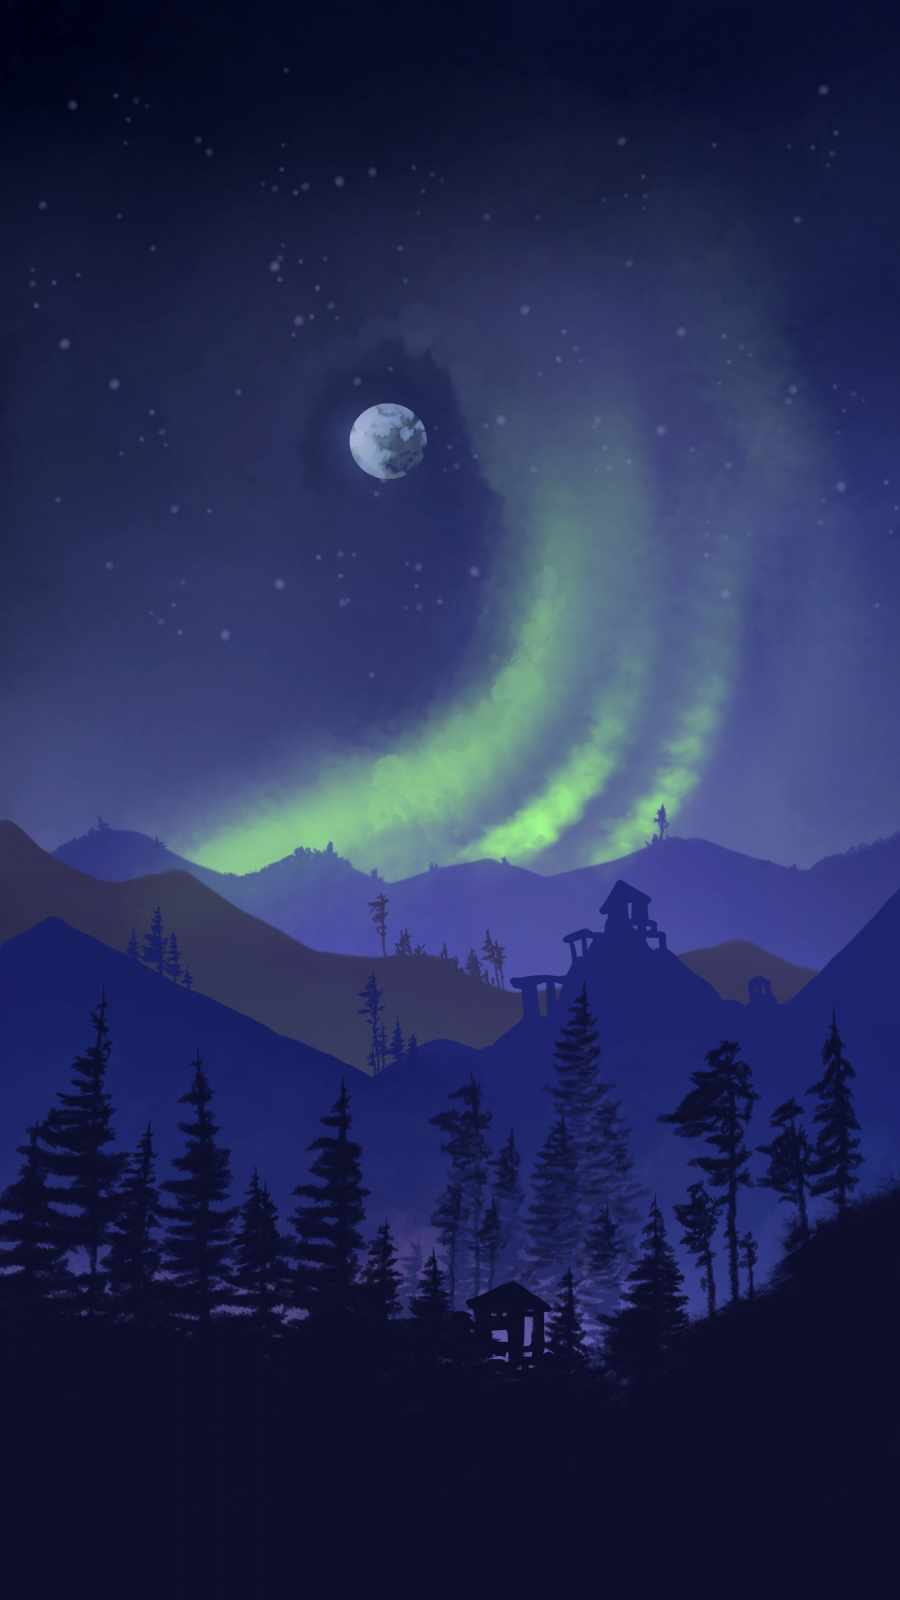 Aurora Night Moon Art - IPhone Wallpapers : iPhone Wallpapers